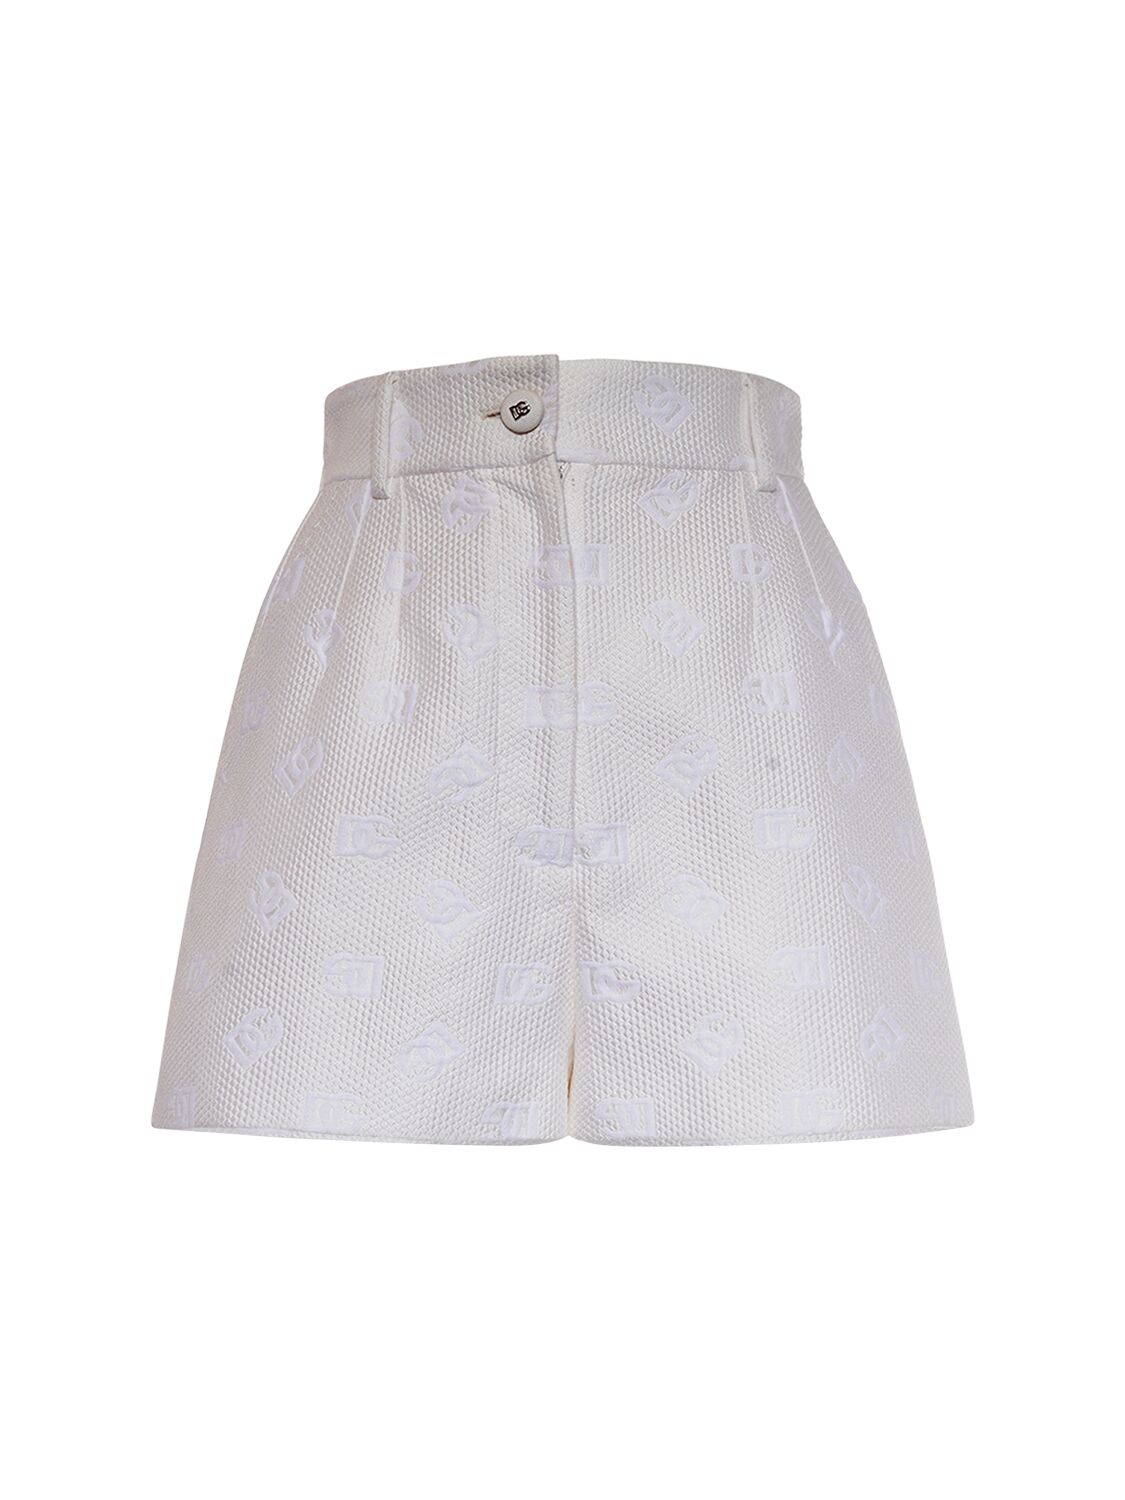 Dolce & Gabbana Dg Monogram Jacquard Shorts In White